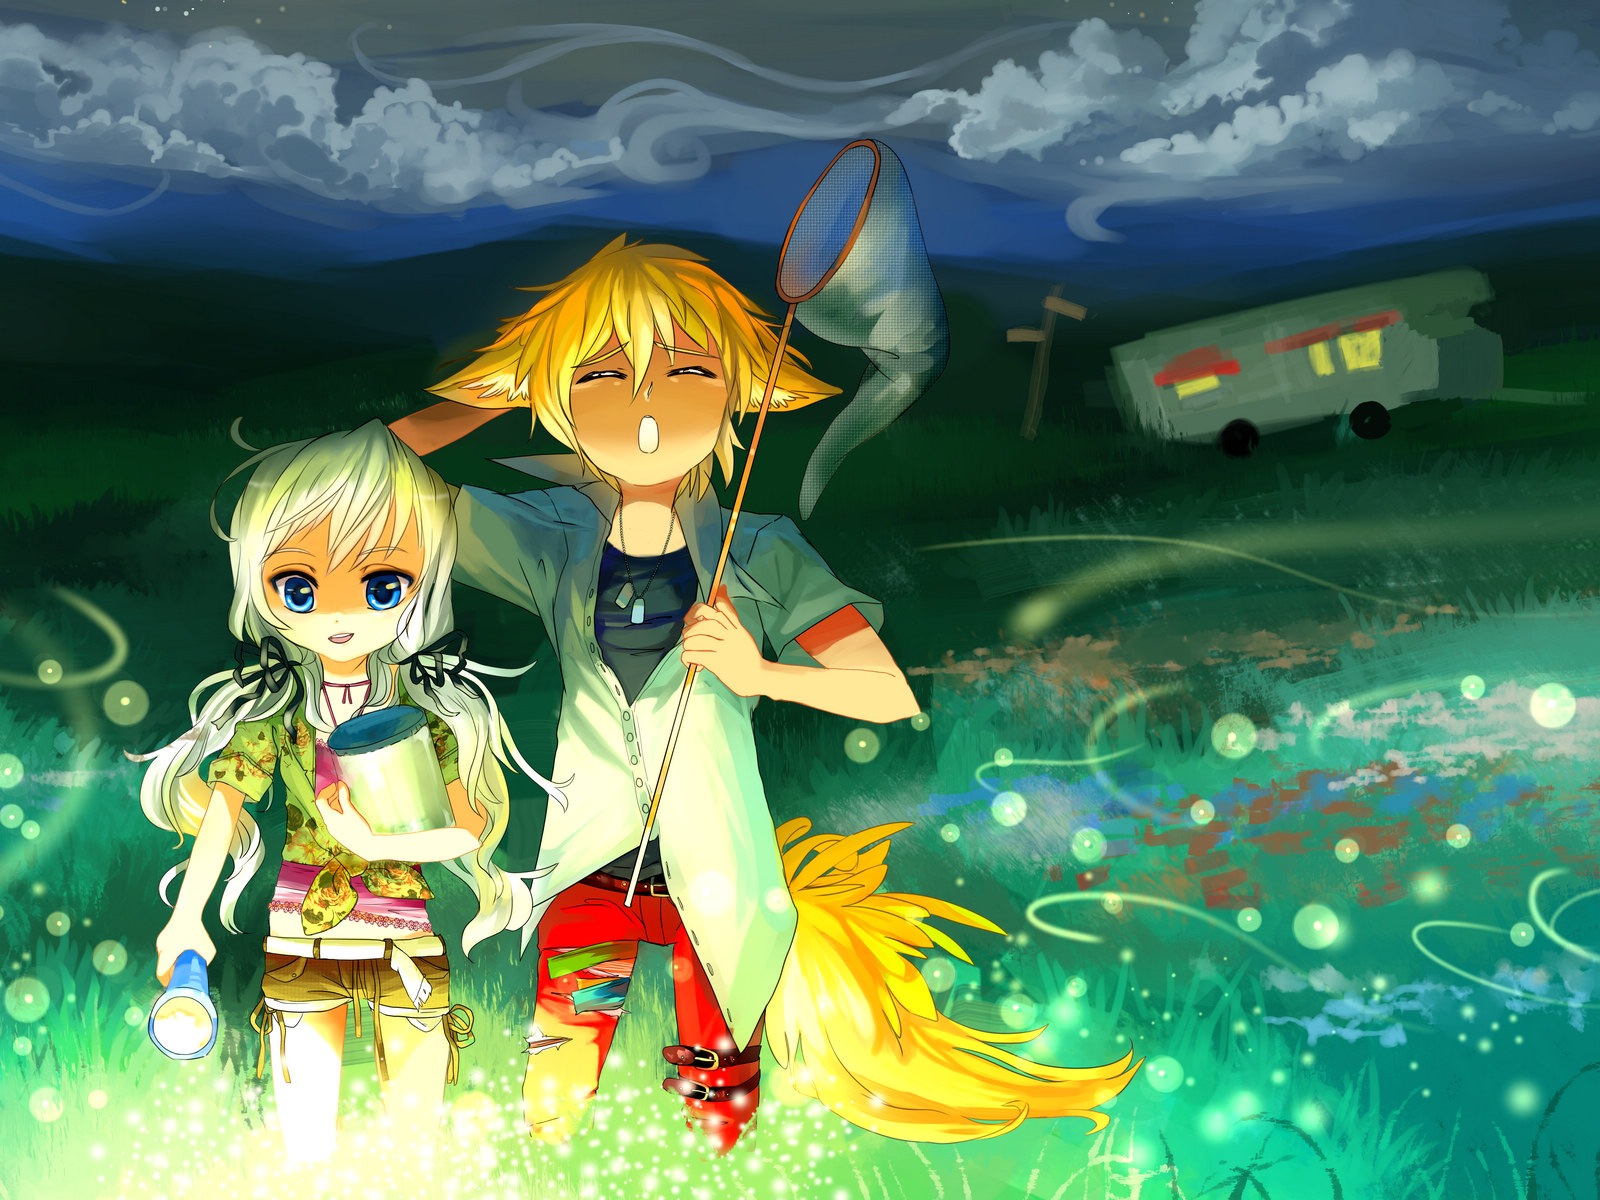 Firefly Summer beautiful anime wallpaper #15 - 1600x1200